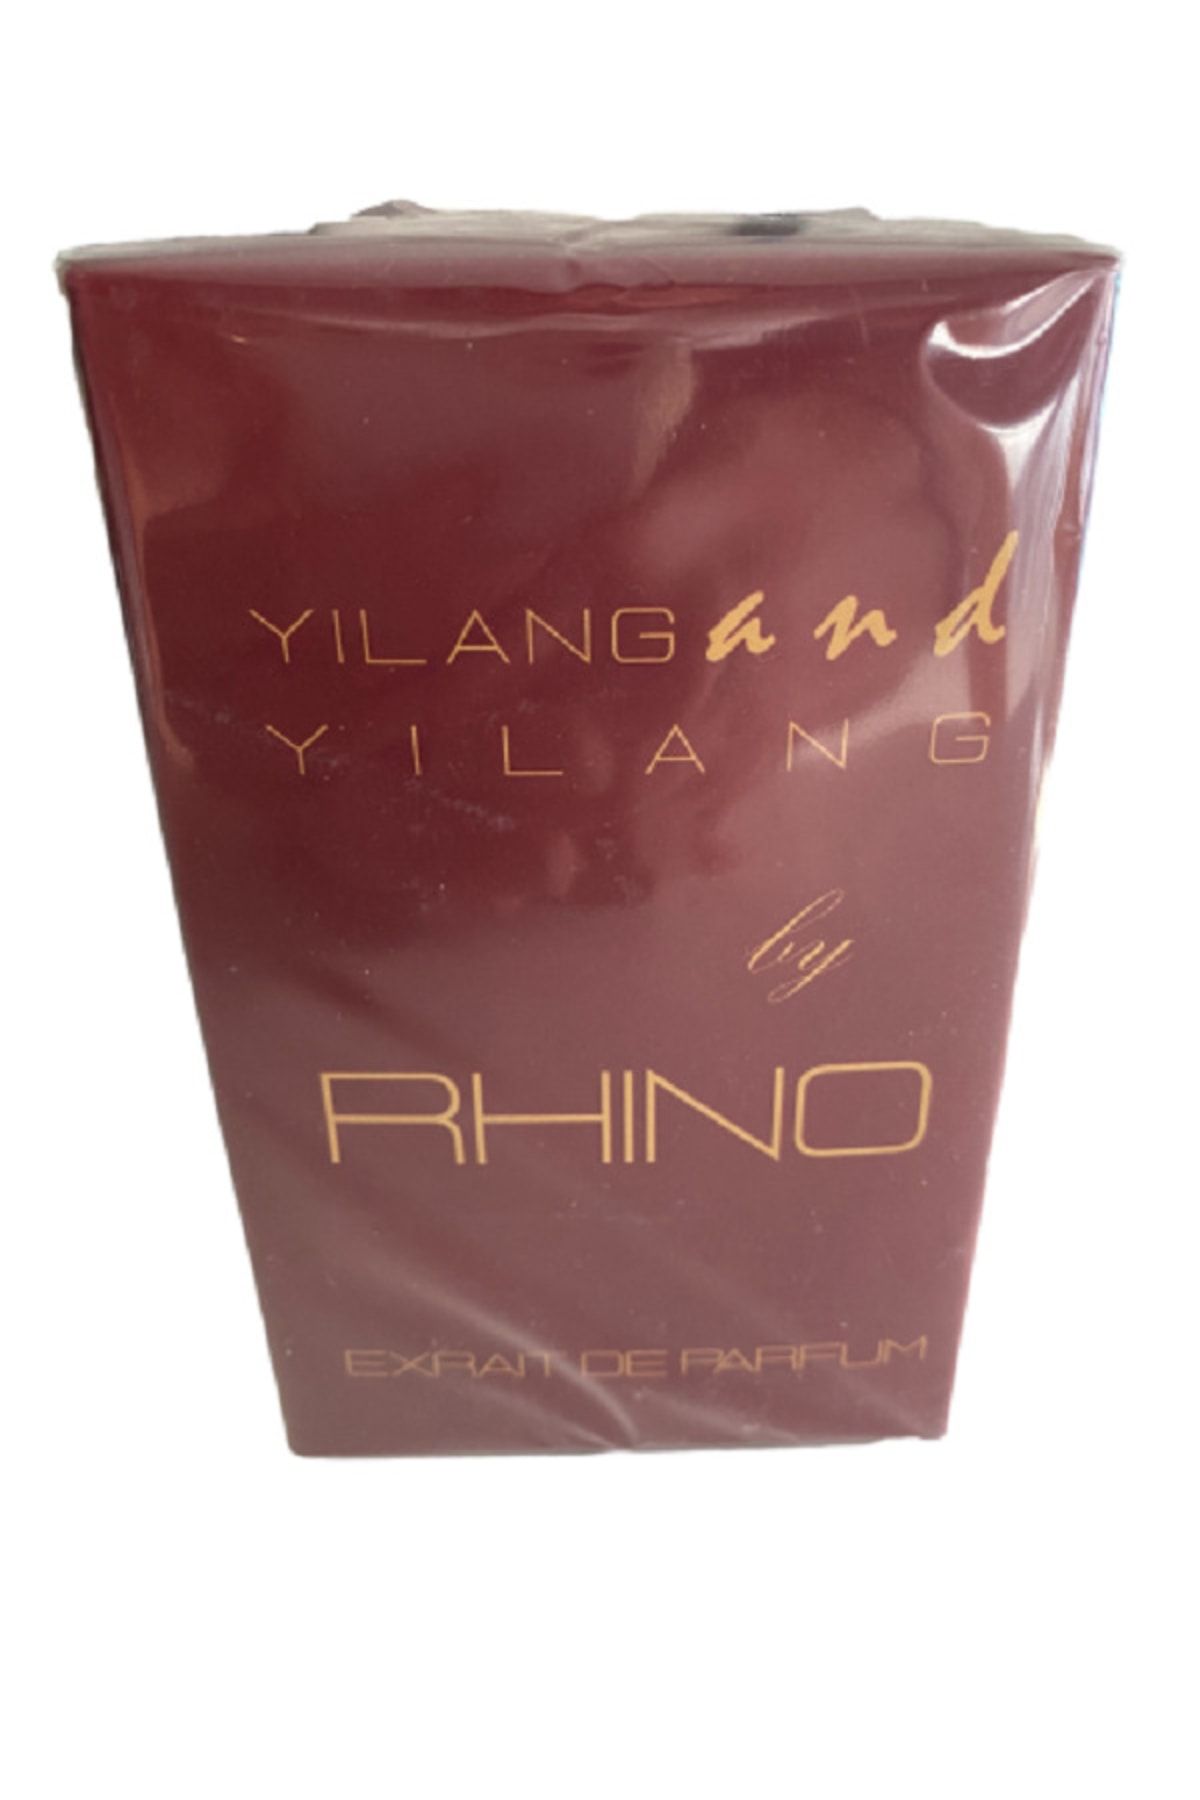 Rhino Atastore Erkek Parfüm 100cc Yılang Yılang